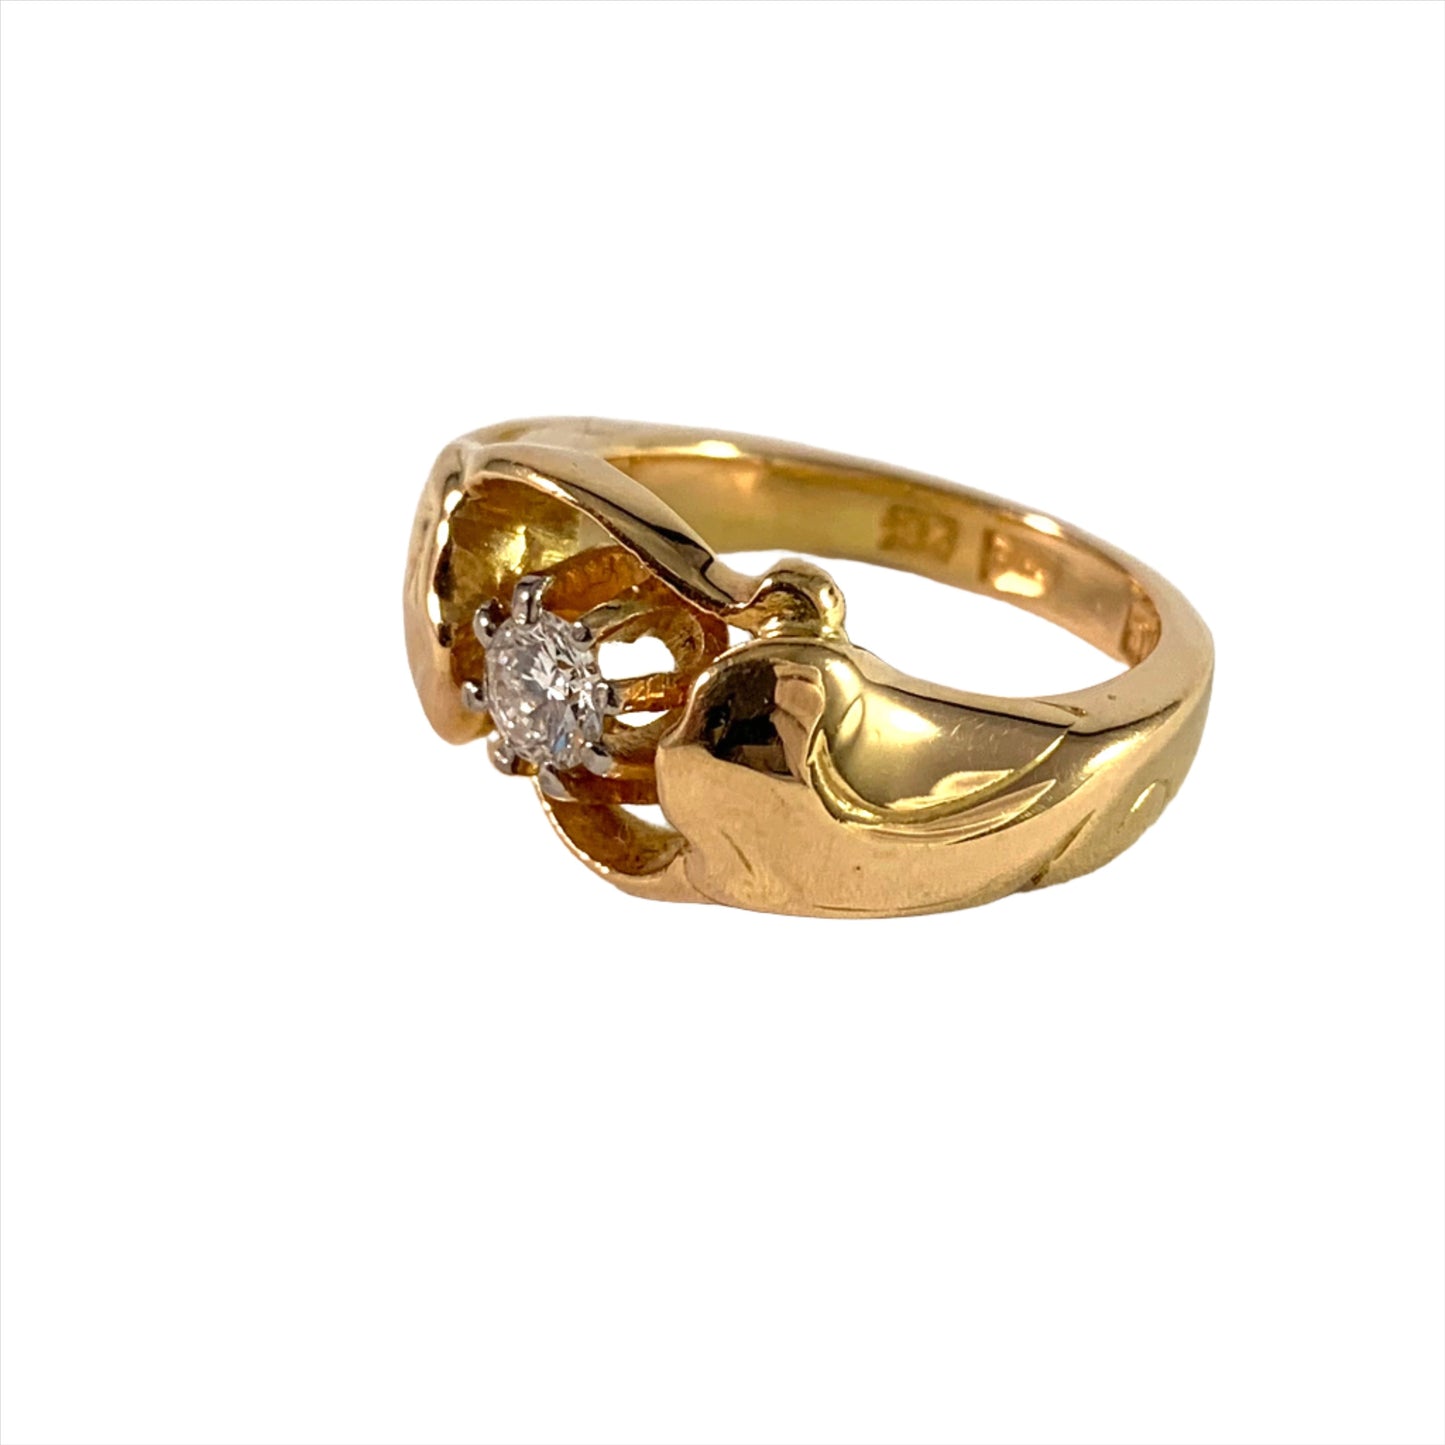 Garmland, Sweden 1950 Massive 18k Gold o.23ct Diamond Ring.